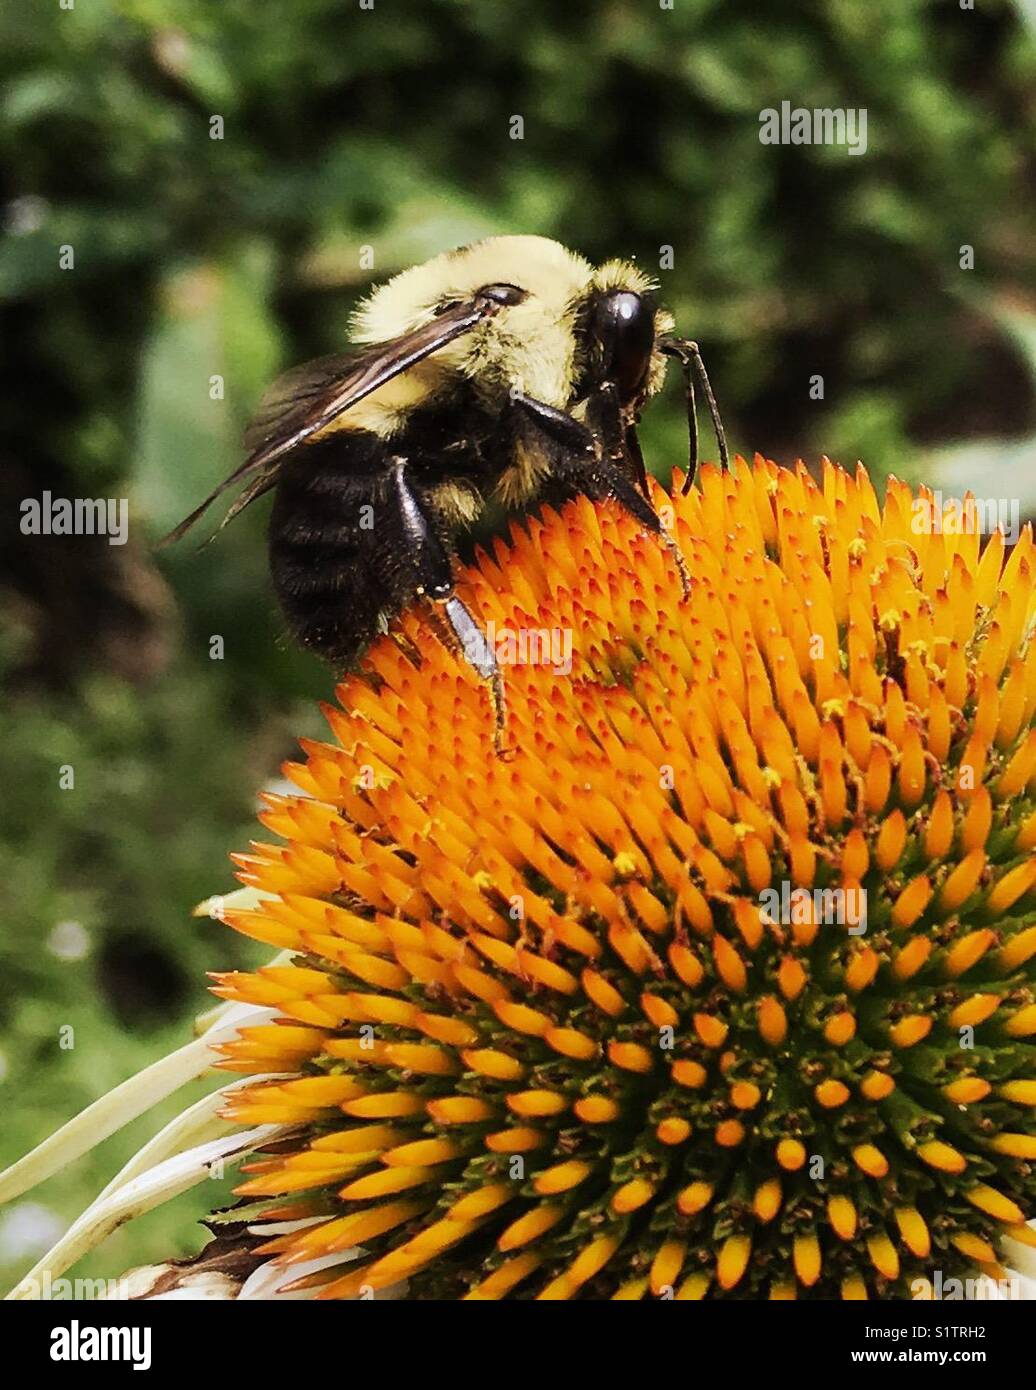 Bumblebee on flower center Stock Photo